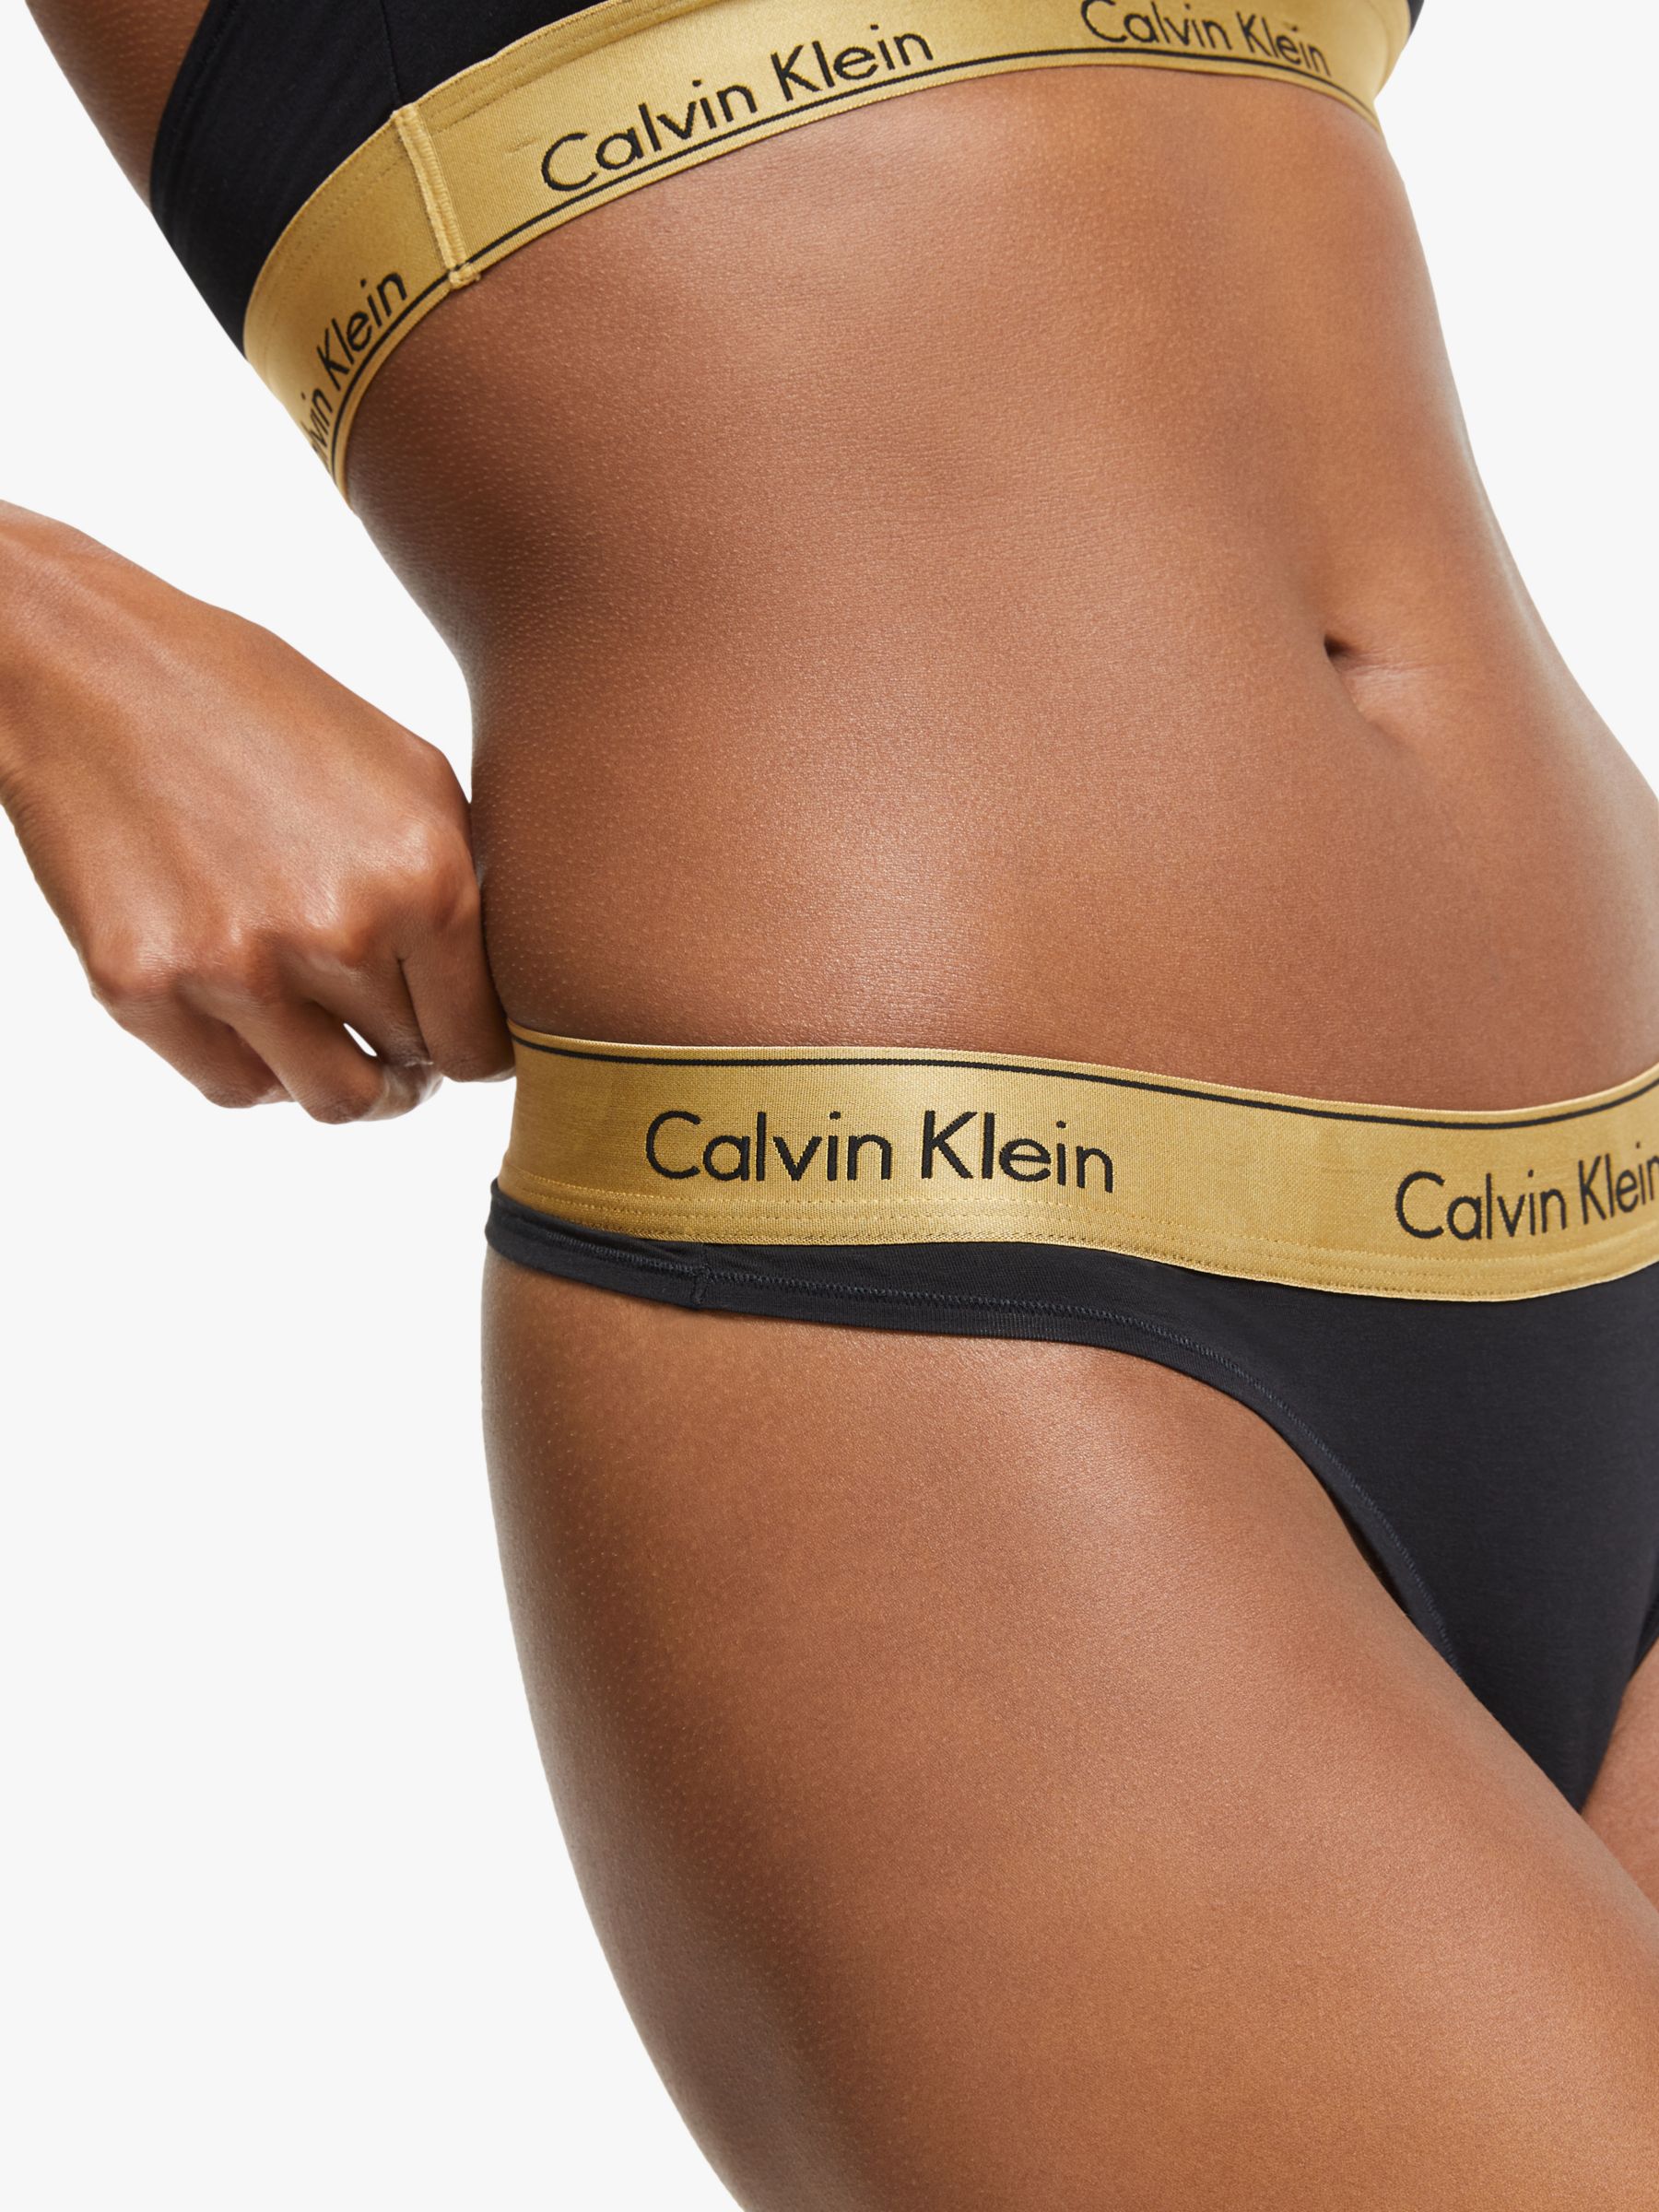 calvin klein bikini black gold